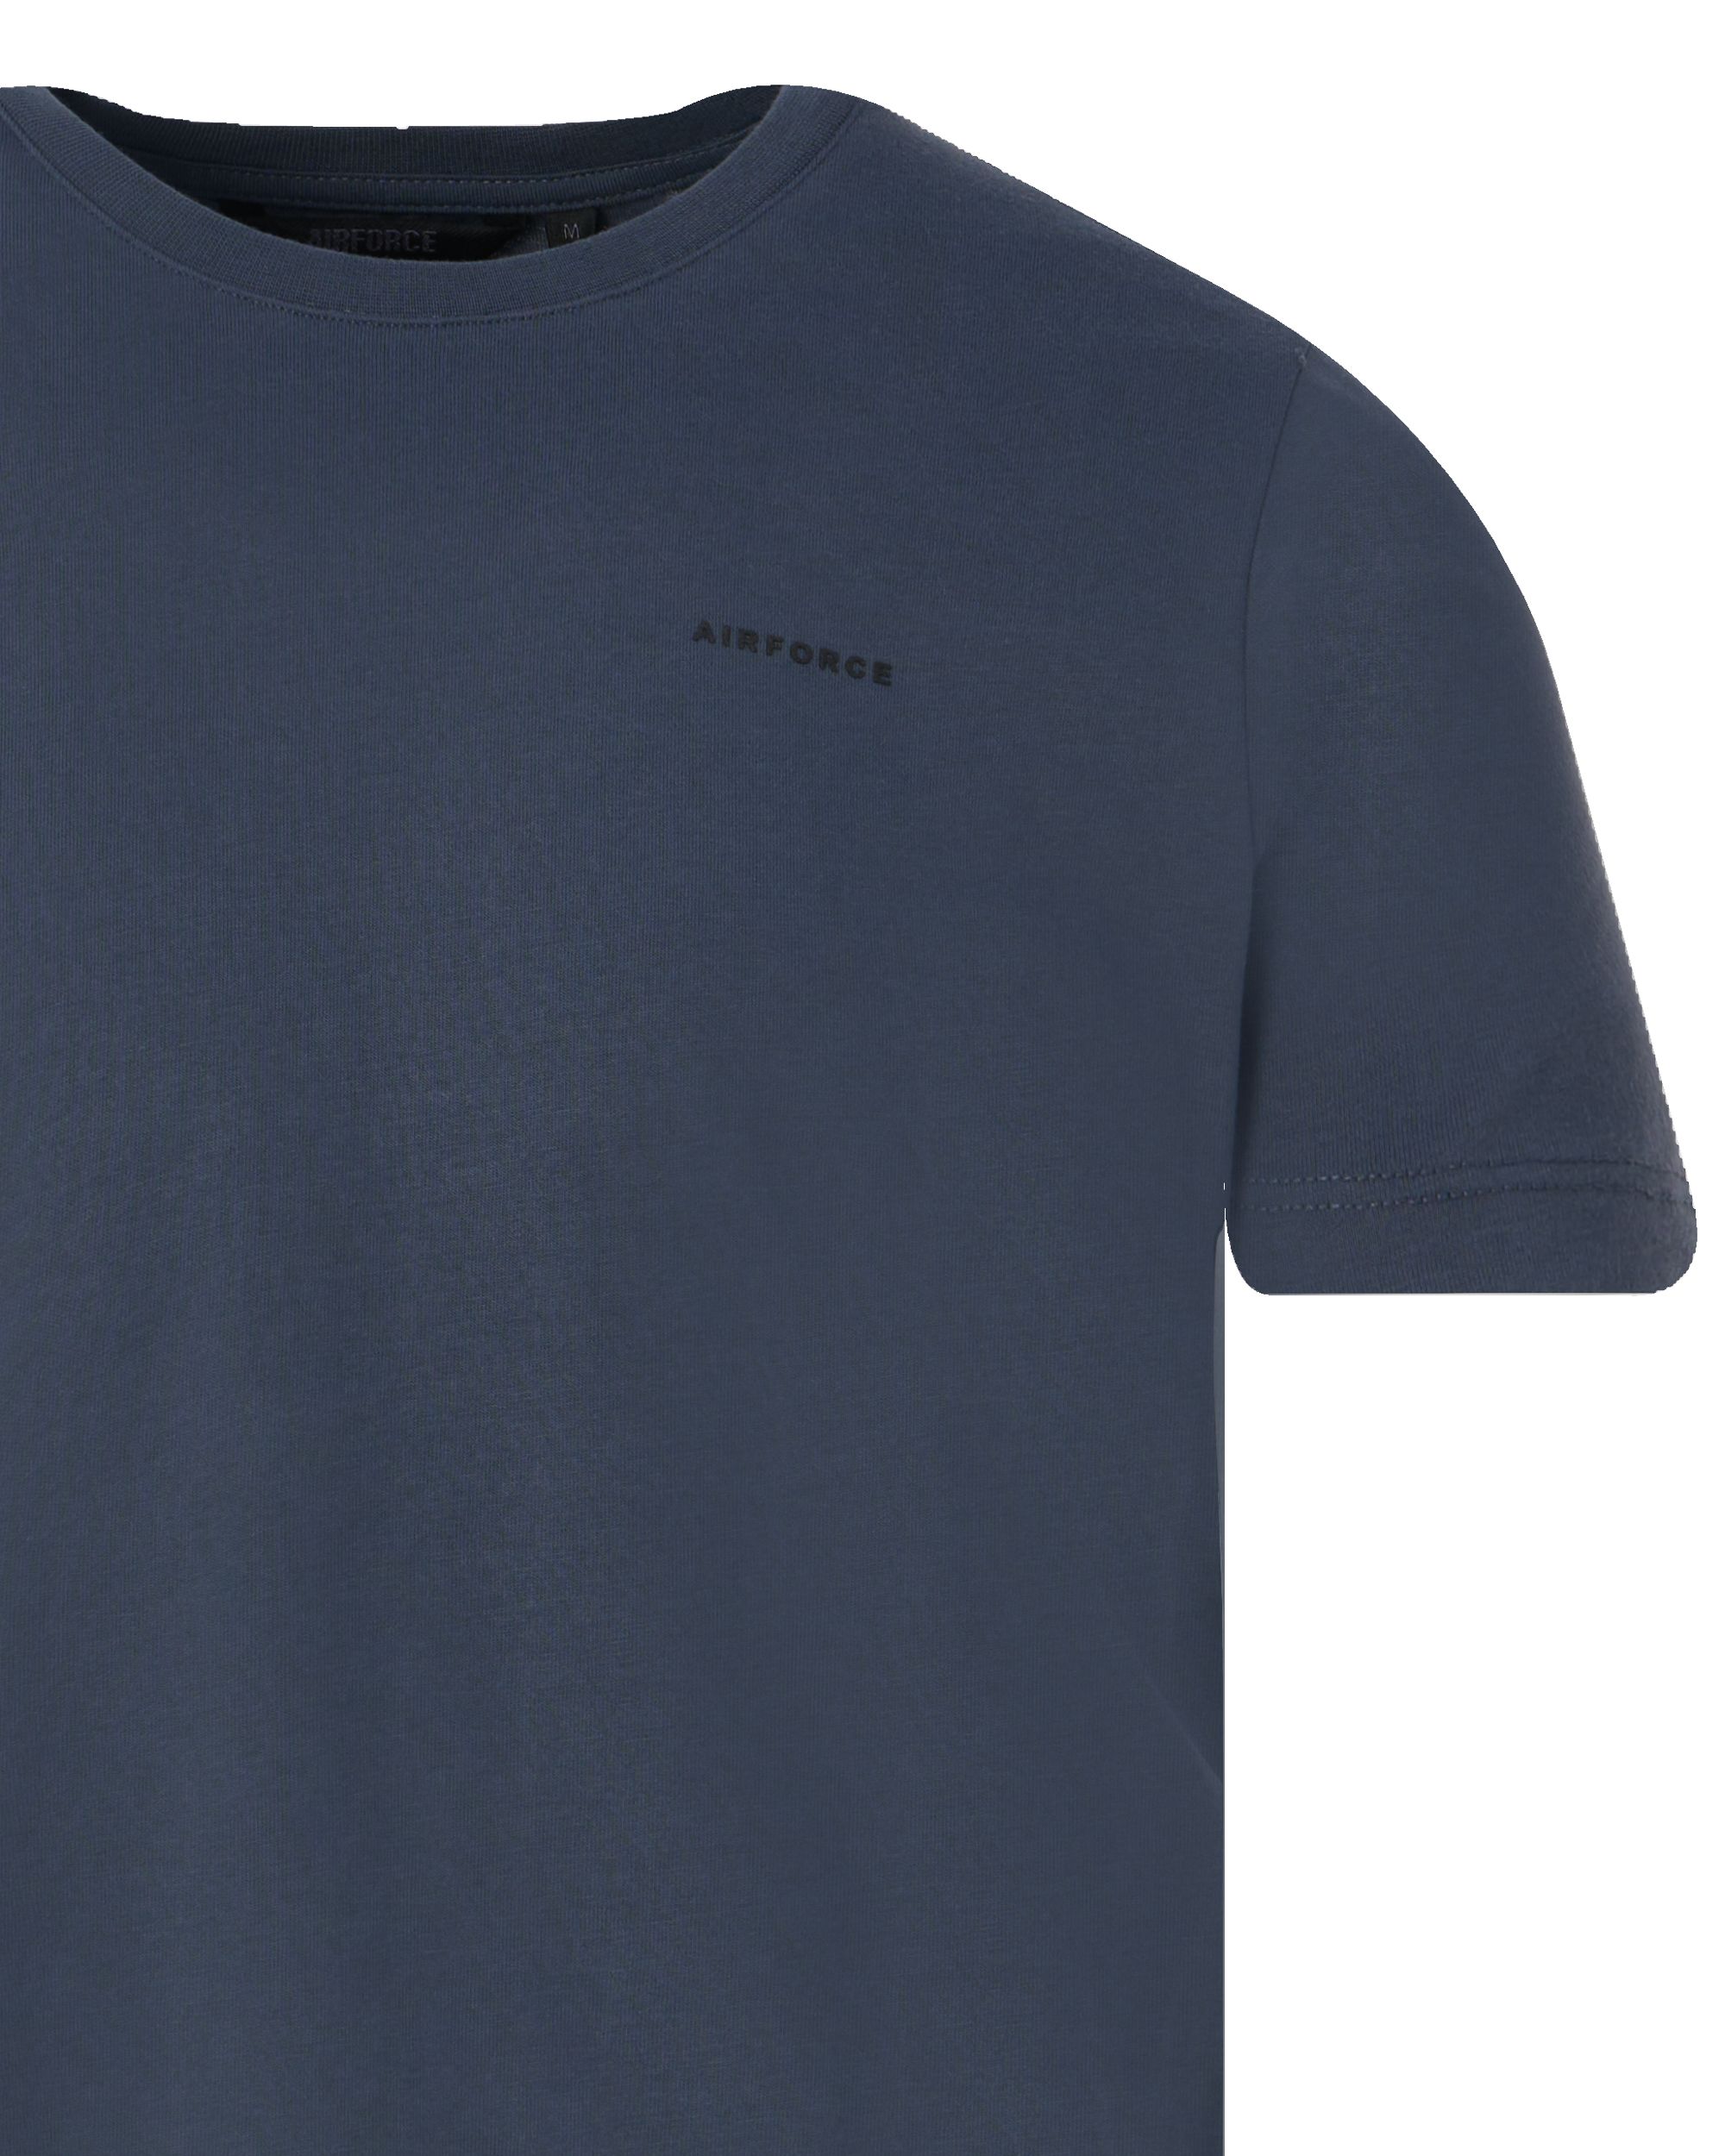 Airforce T-shirt KM Blauw 092915-001-L